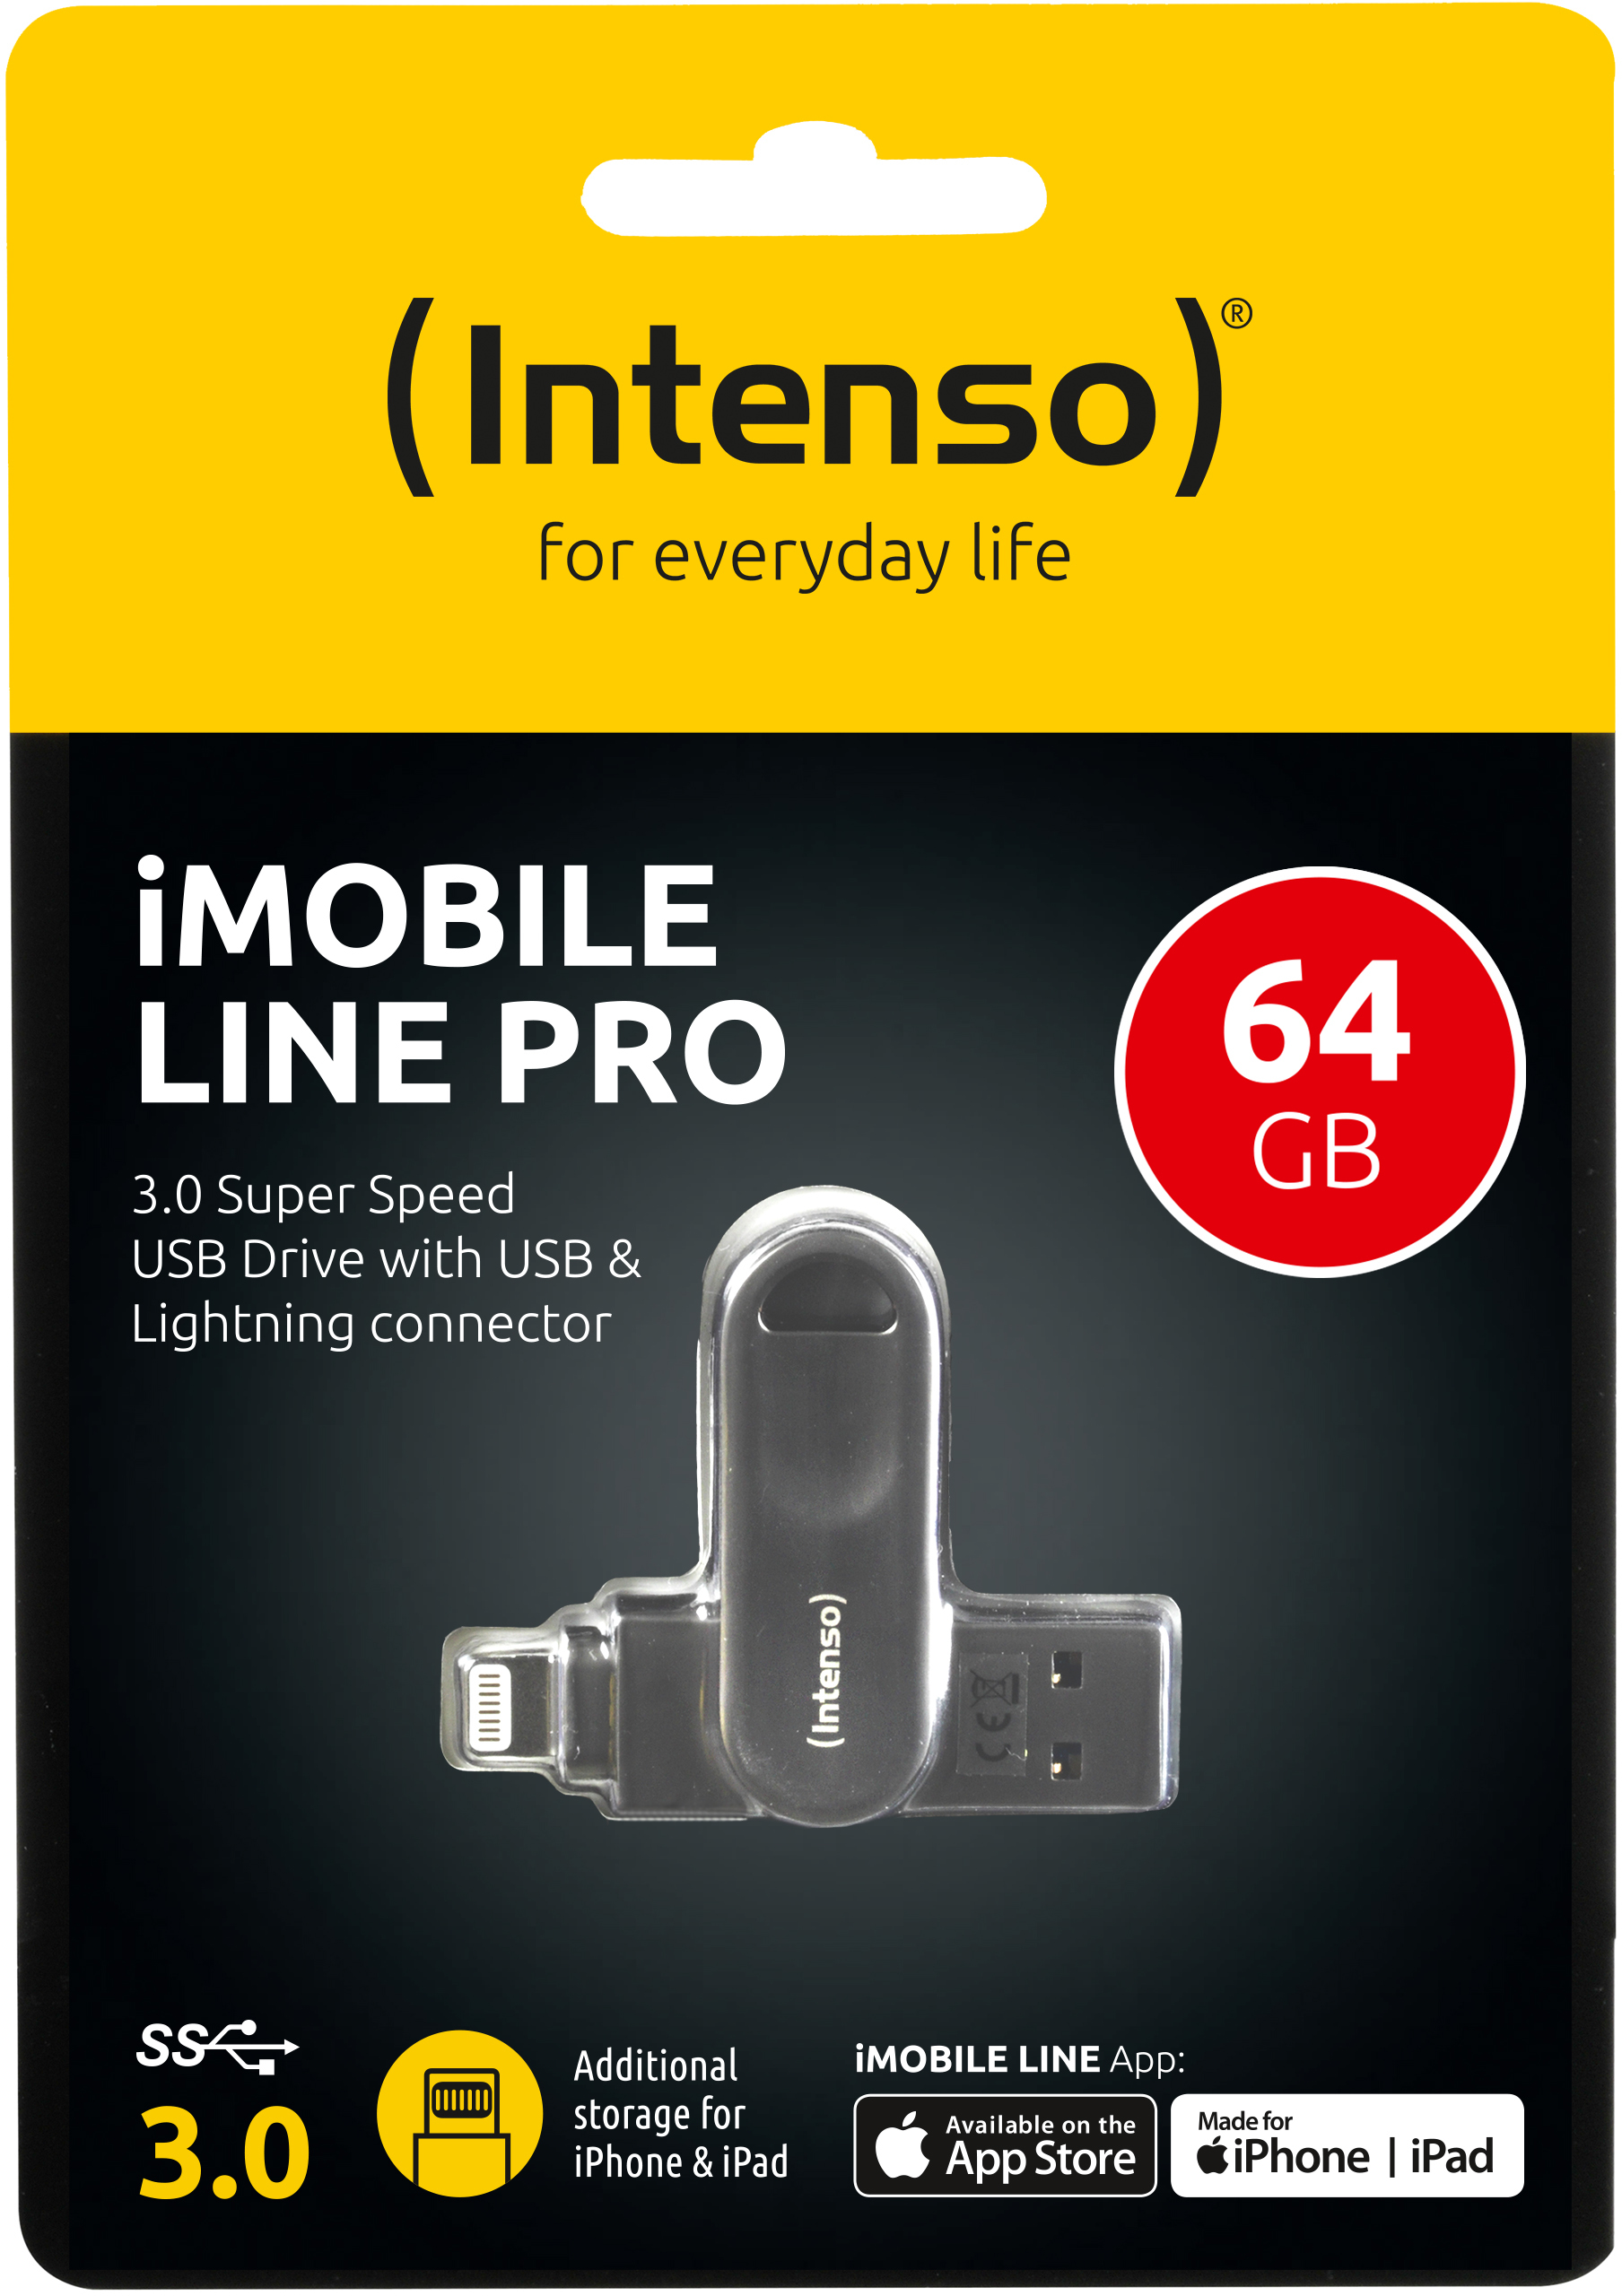 mit USB-Stick, Connector PRO 64 Anthrazit Lightning MB/s, Apple 70 IMOBILE LINE GB, INTENSO